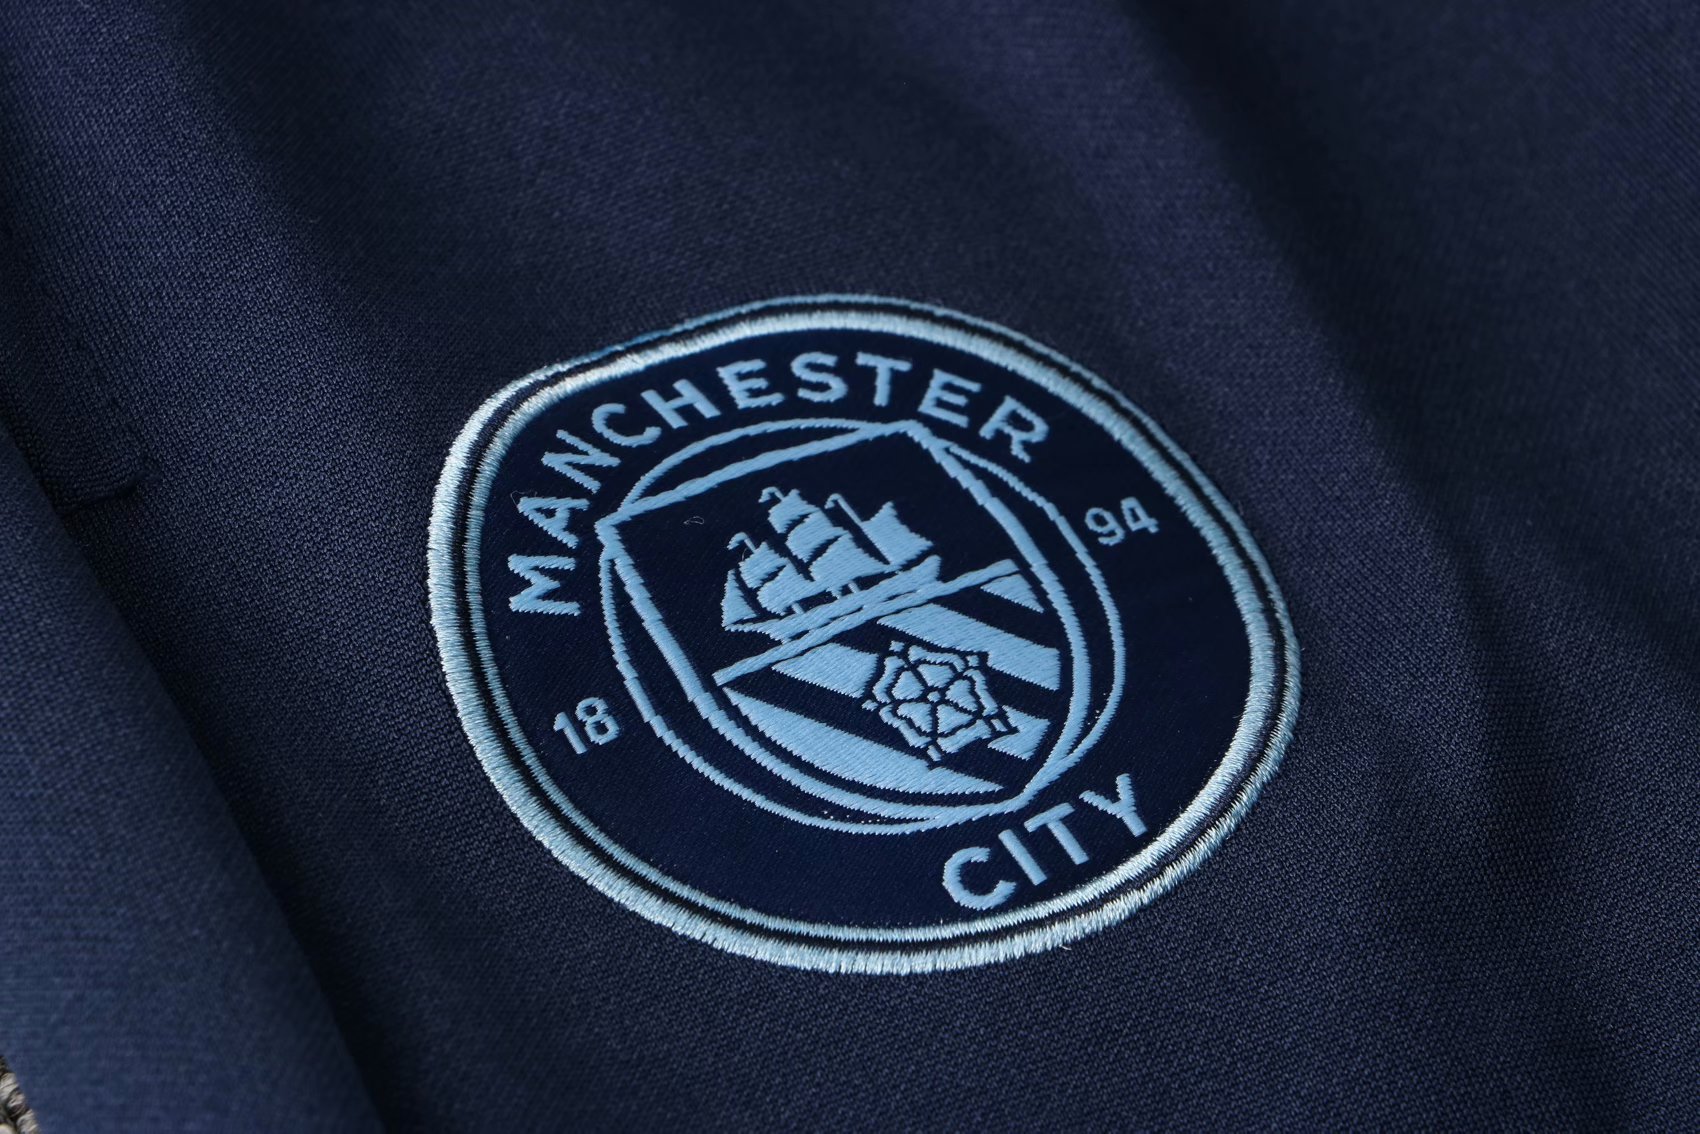 Manchester City White Soccer Training Suit Mens 2021/22 